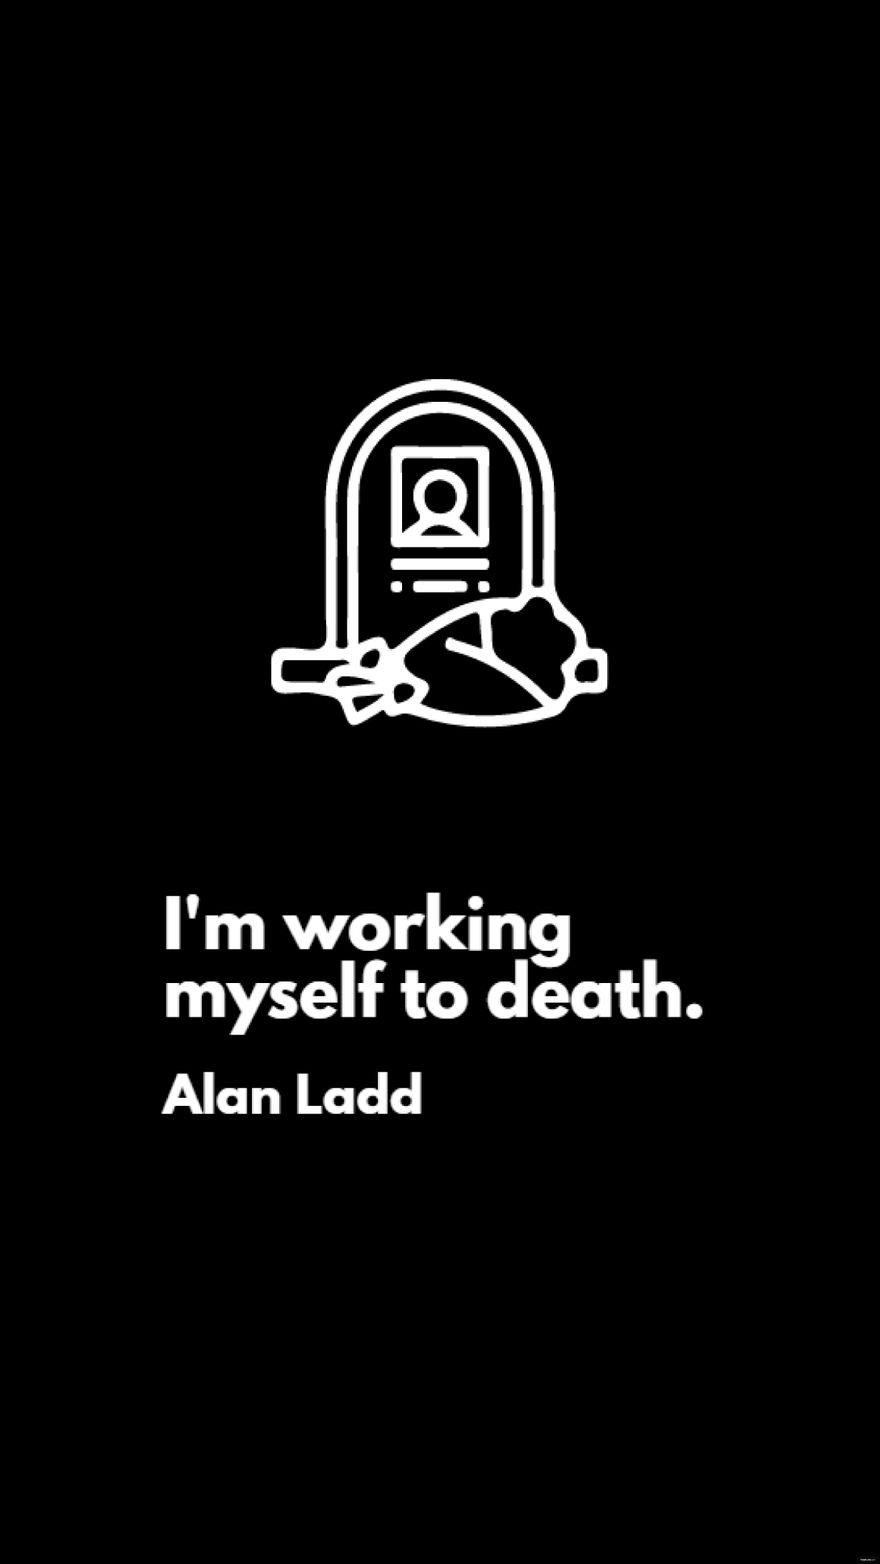 Free Alan Ladd - I'm working myself to death.